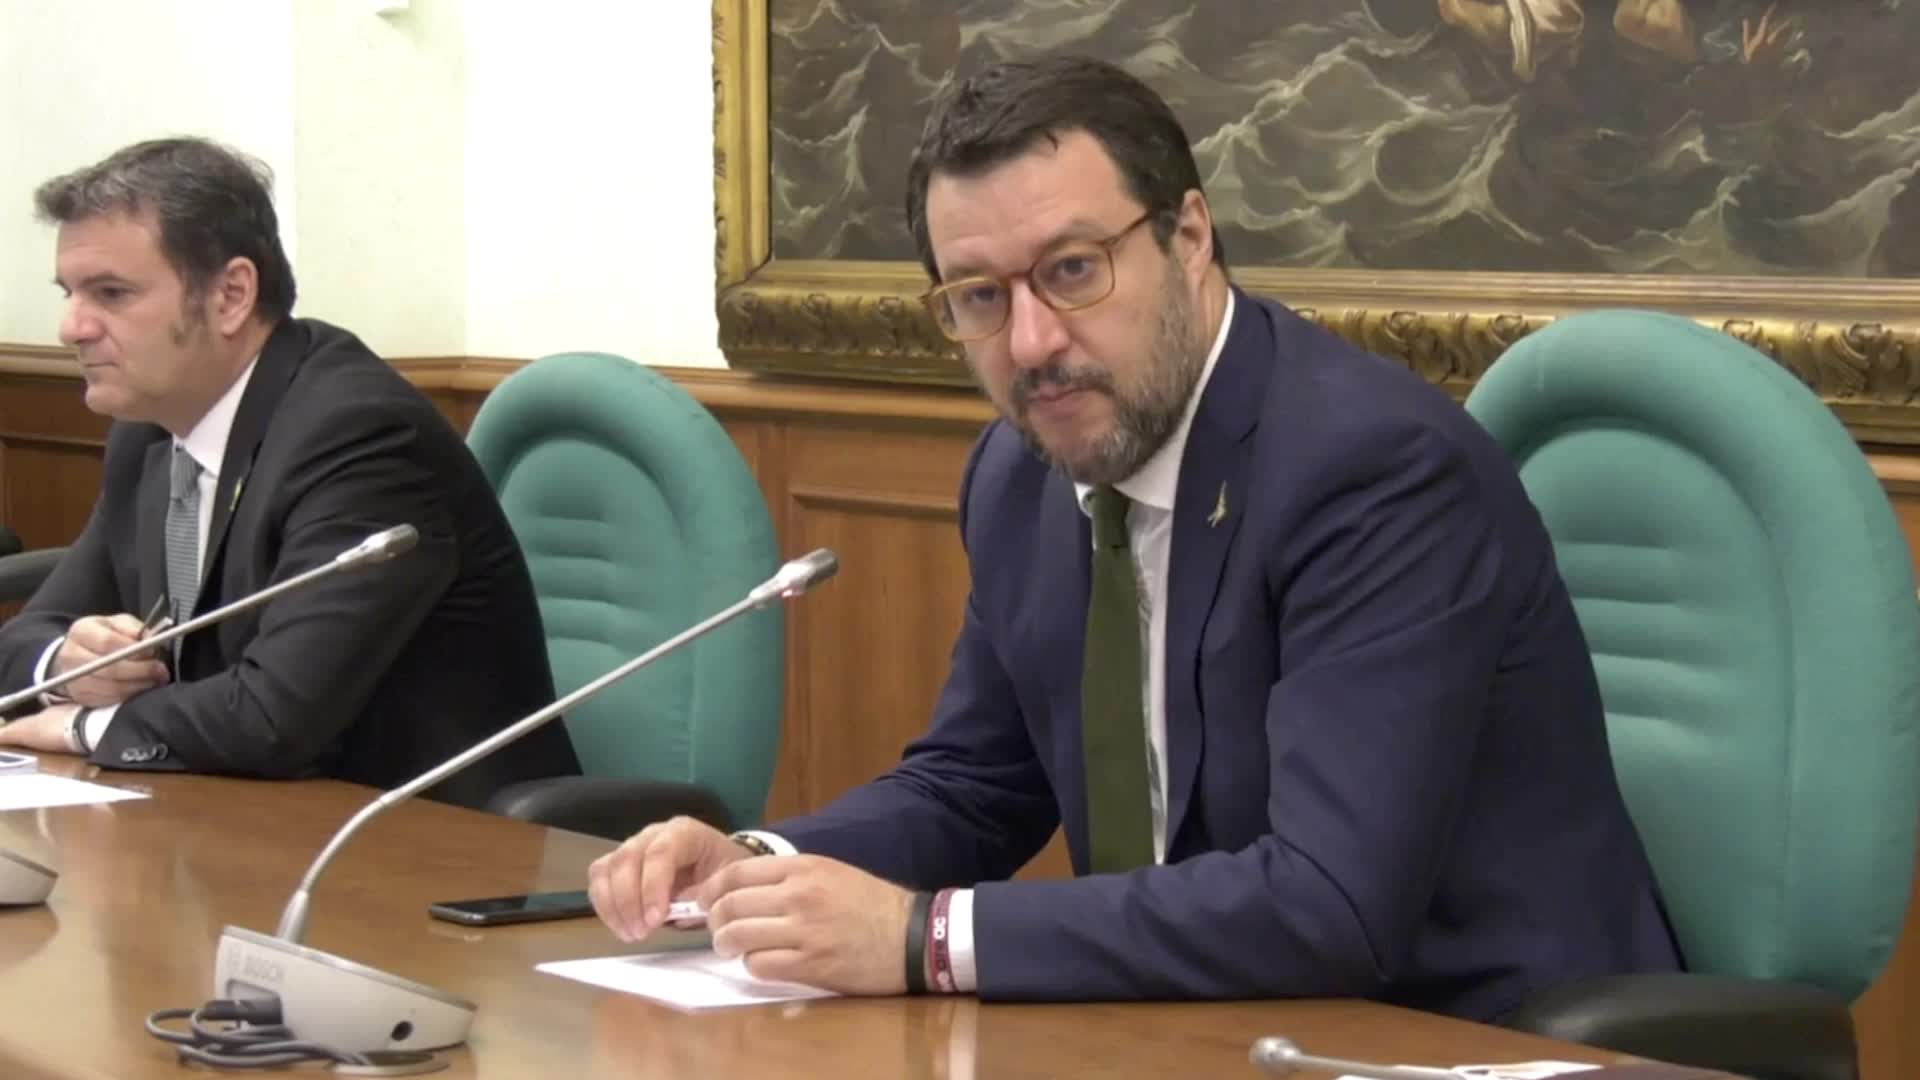 Coronavirus, Salvini: "Von der Leyen non bastano le scuse"